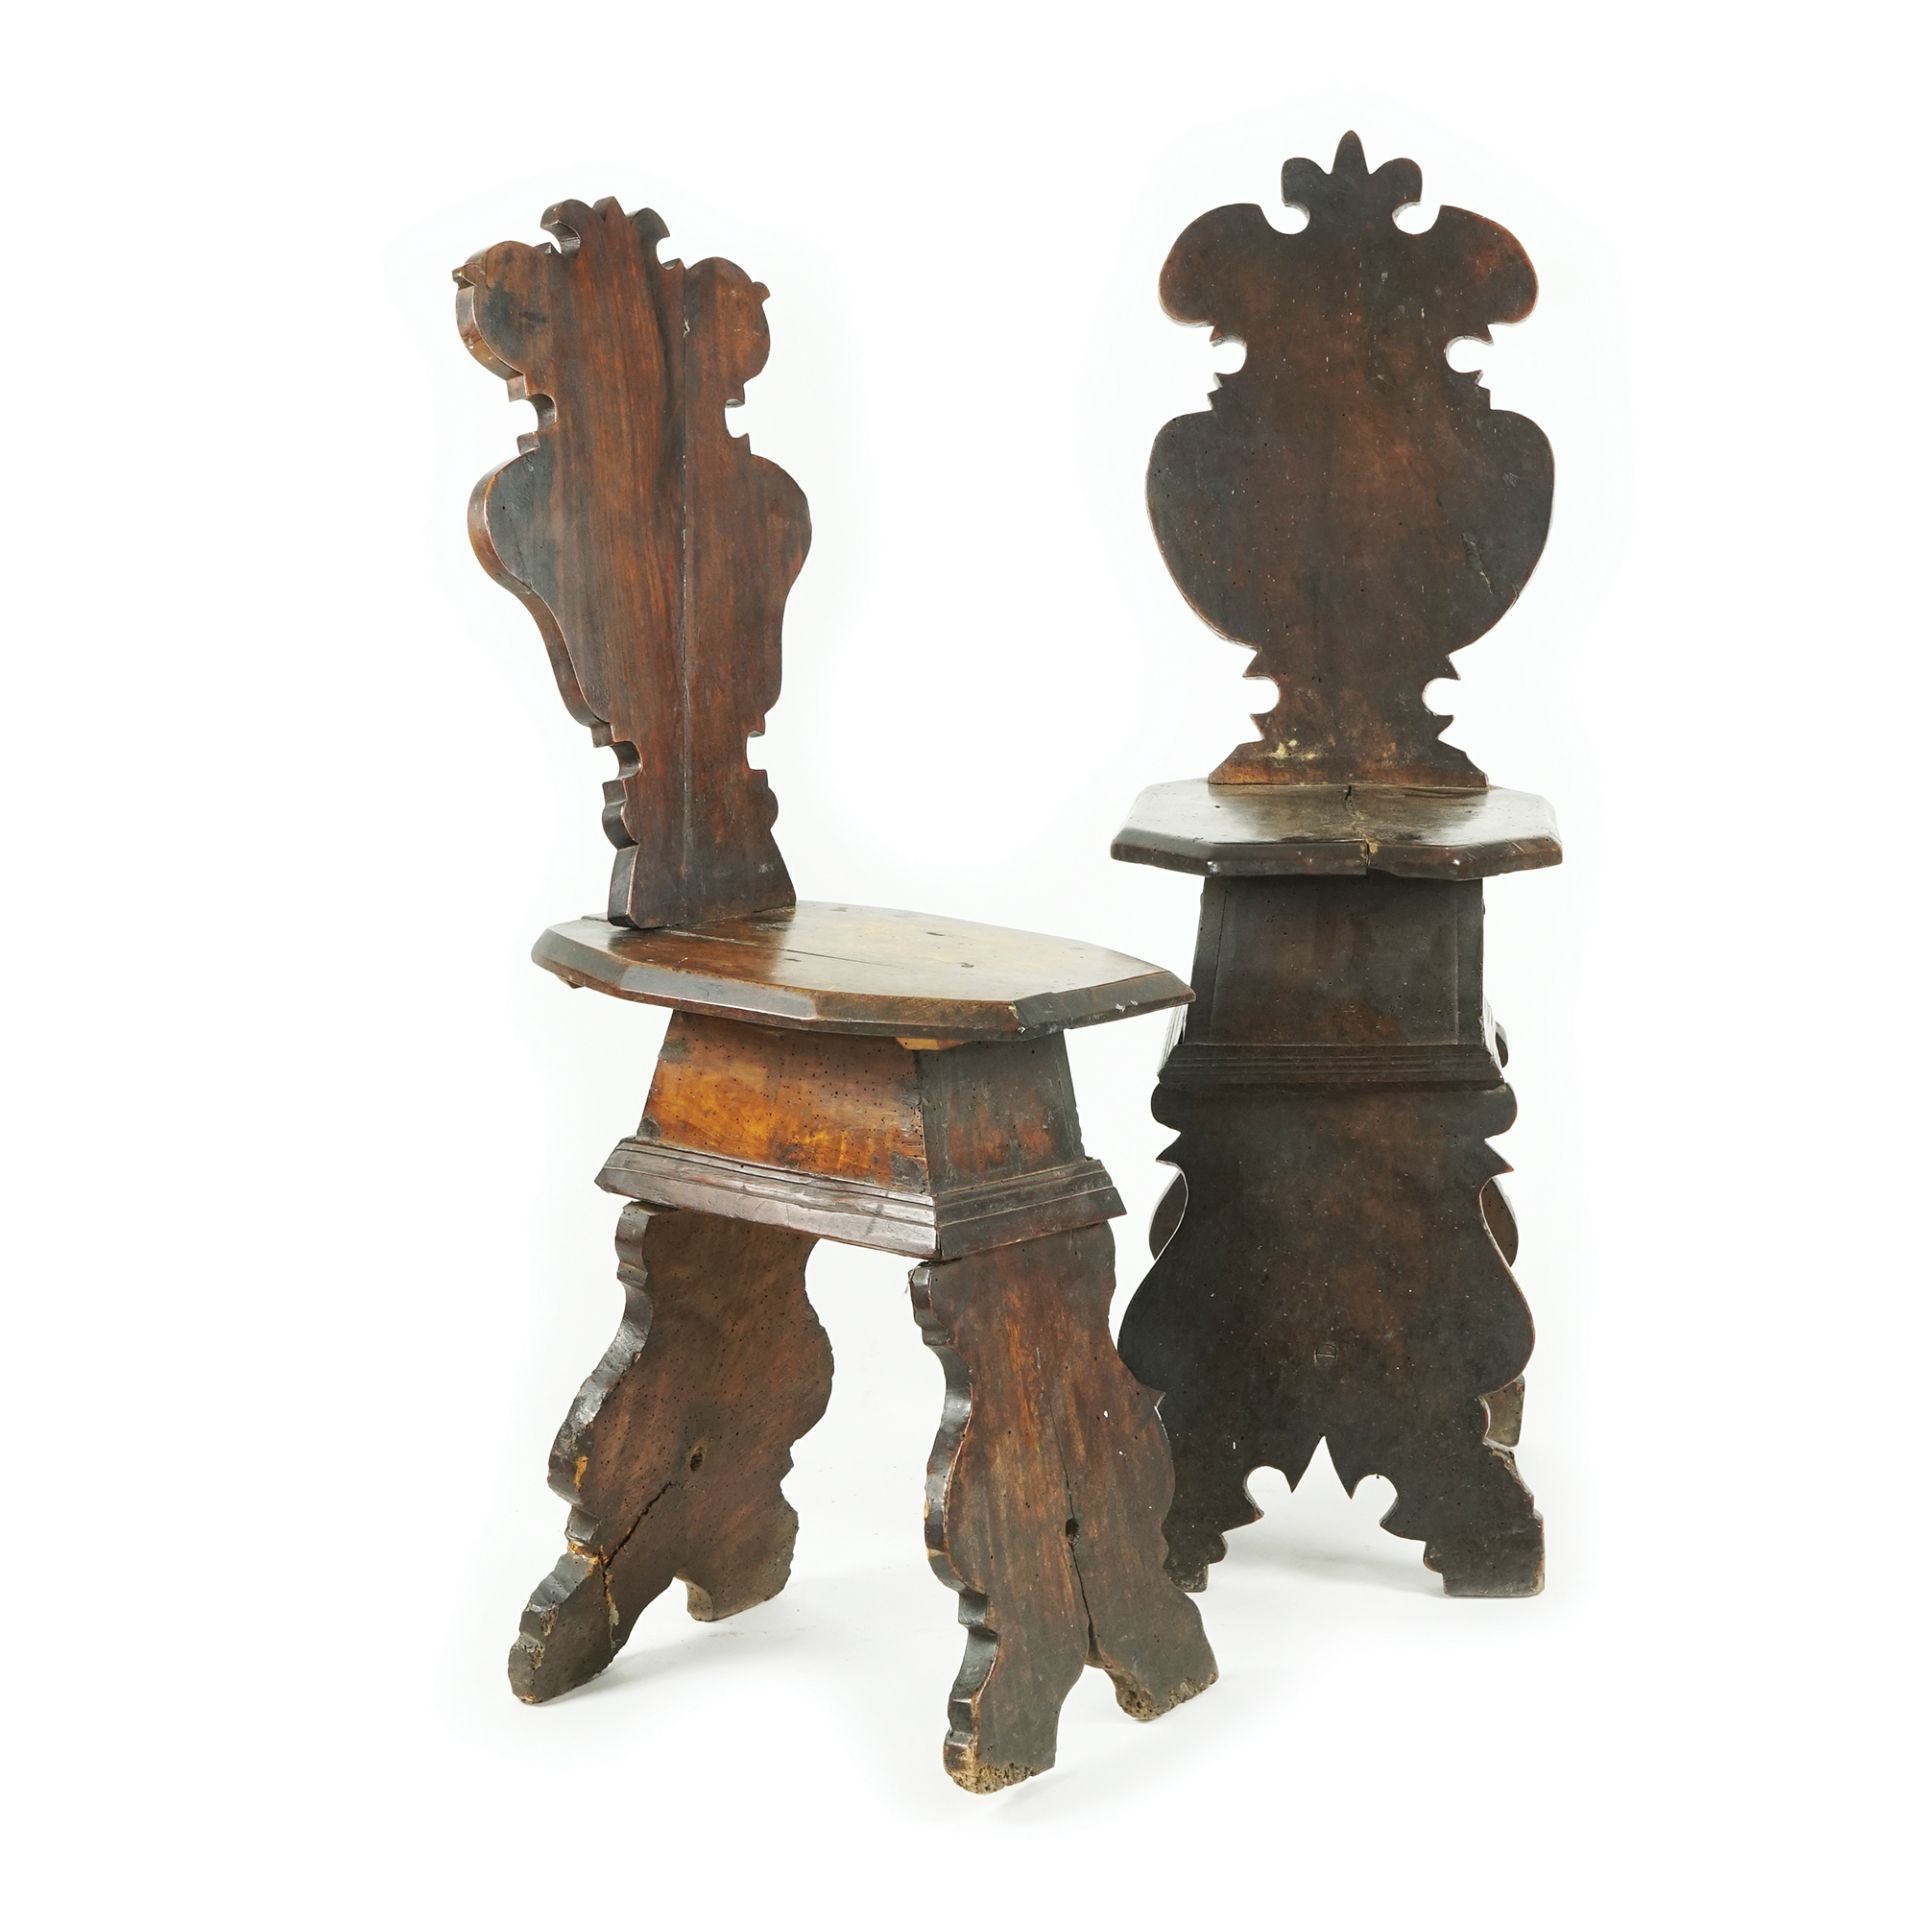 A pair of Umbrian walnut stools, 16th century